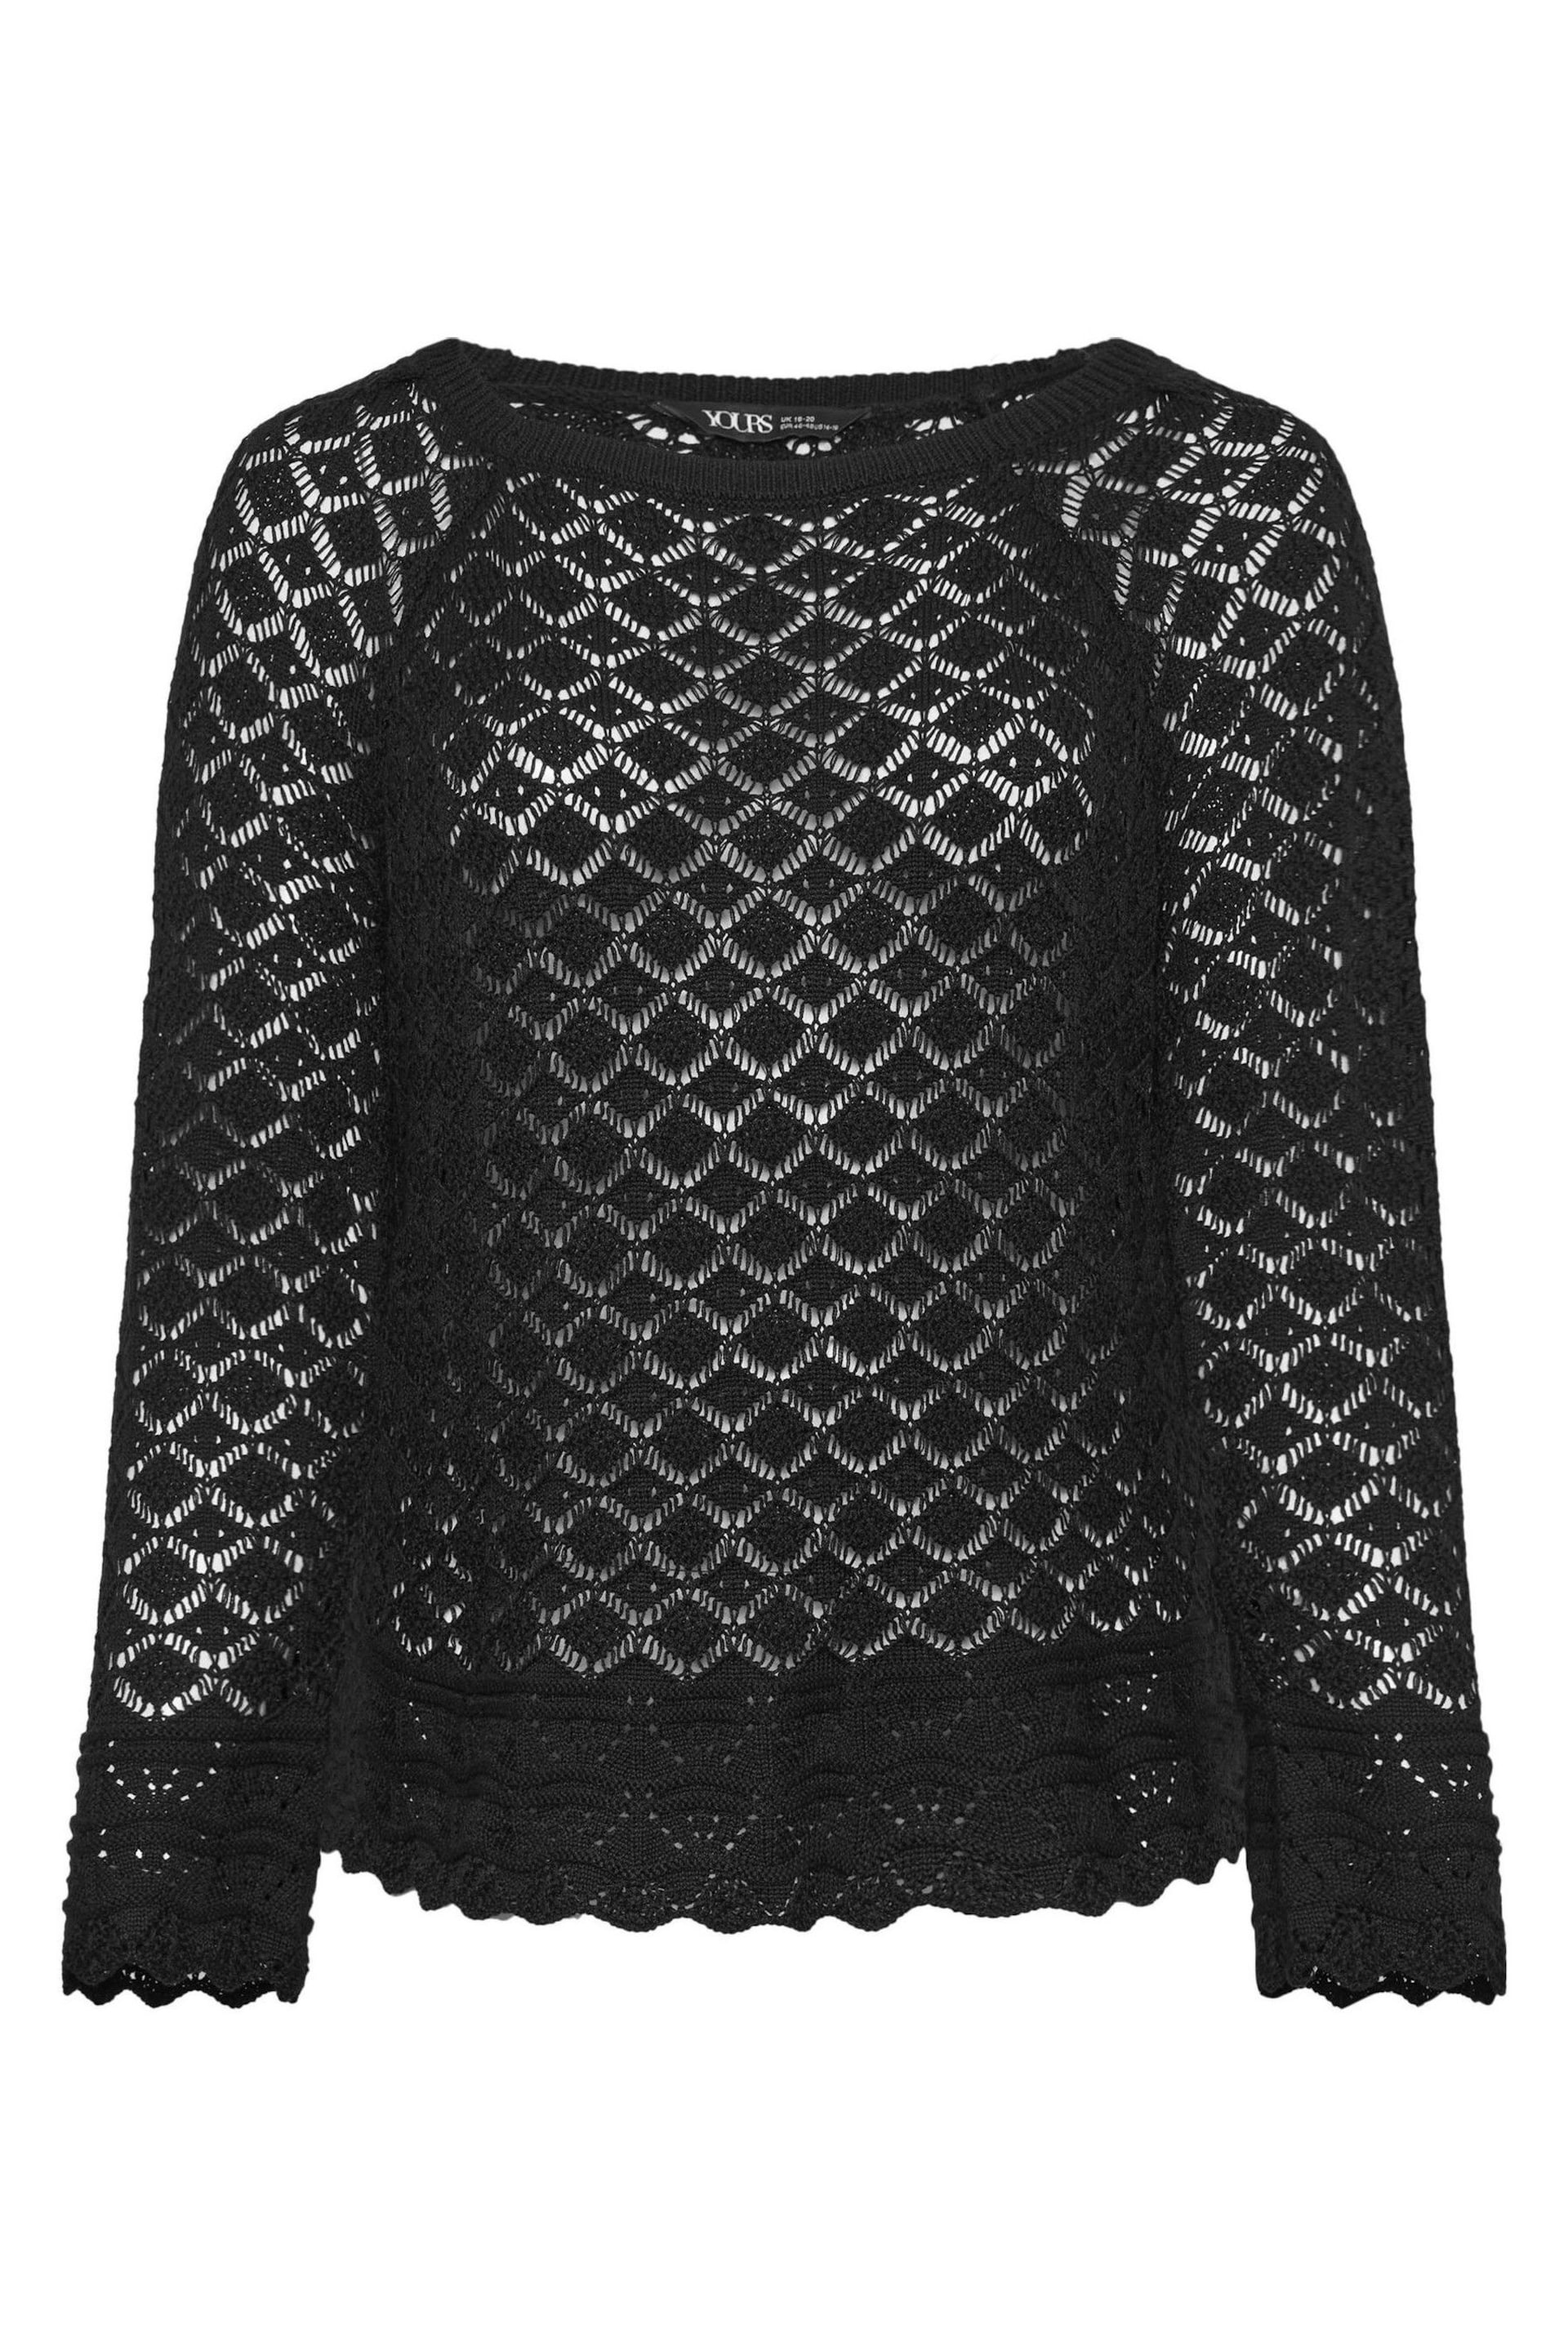 Yours Curve Black Crochet Detail Jumper - Image 5 of 5